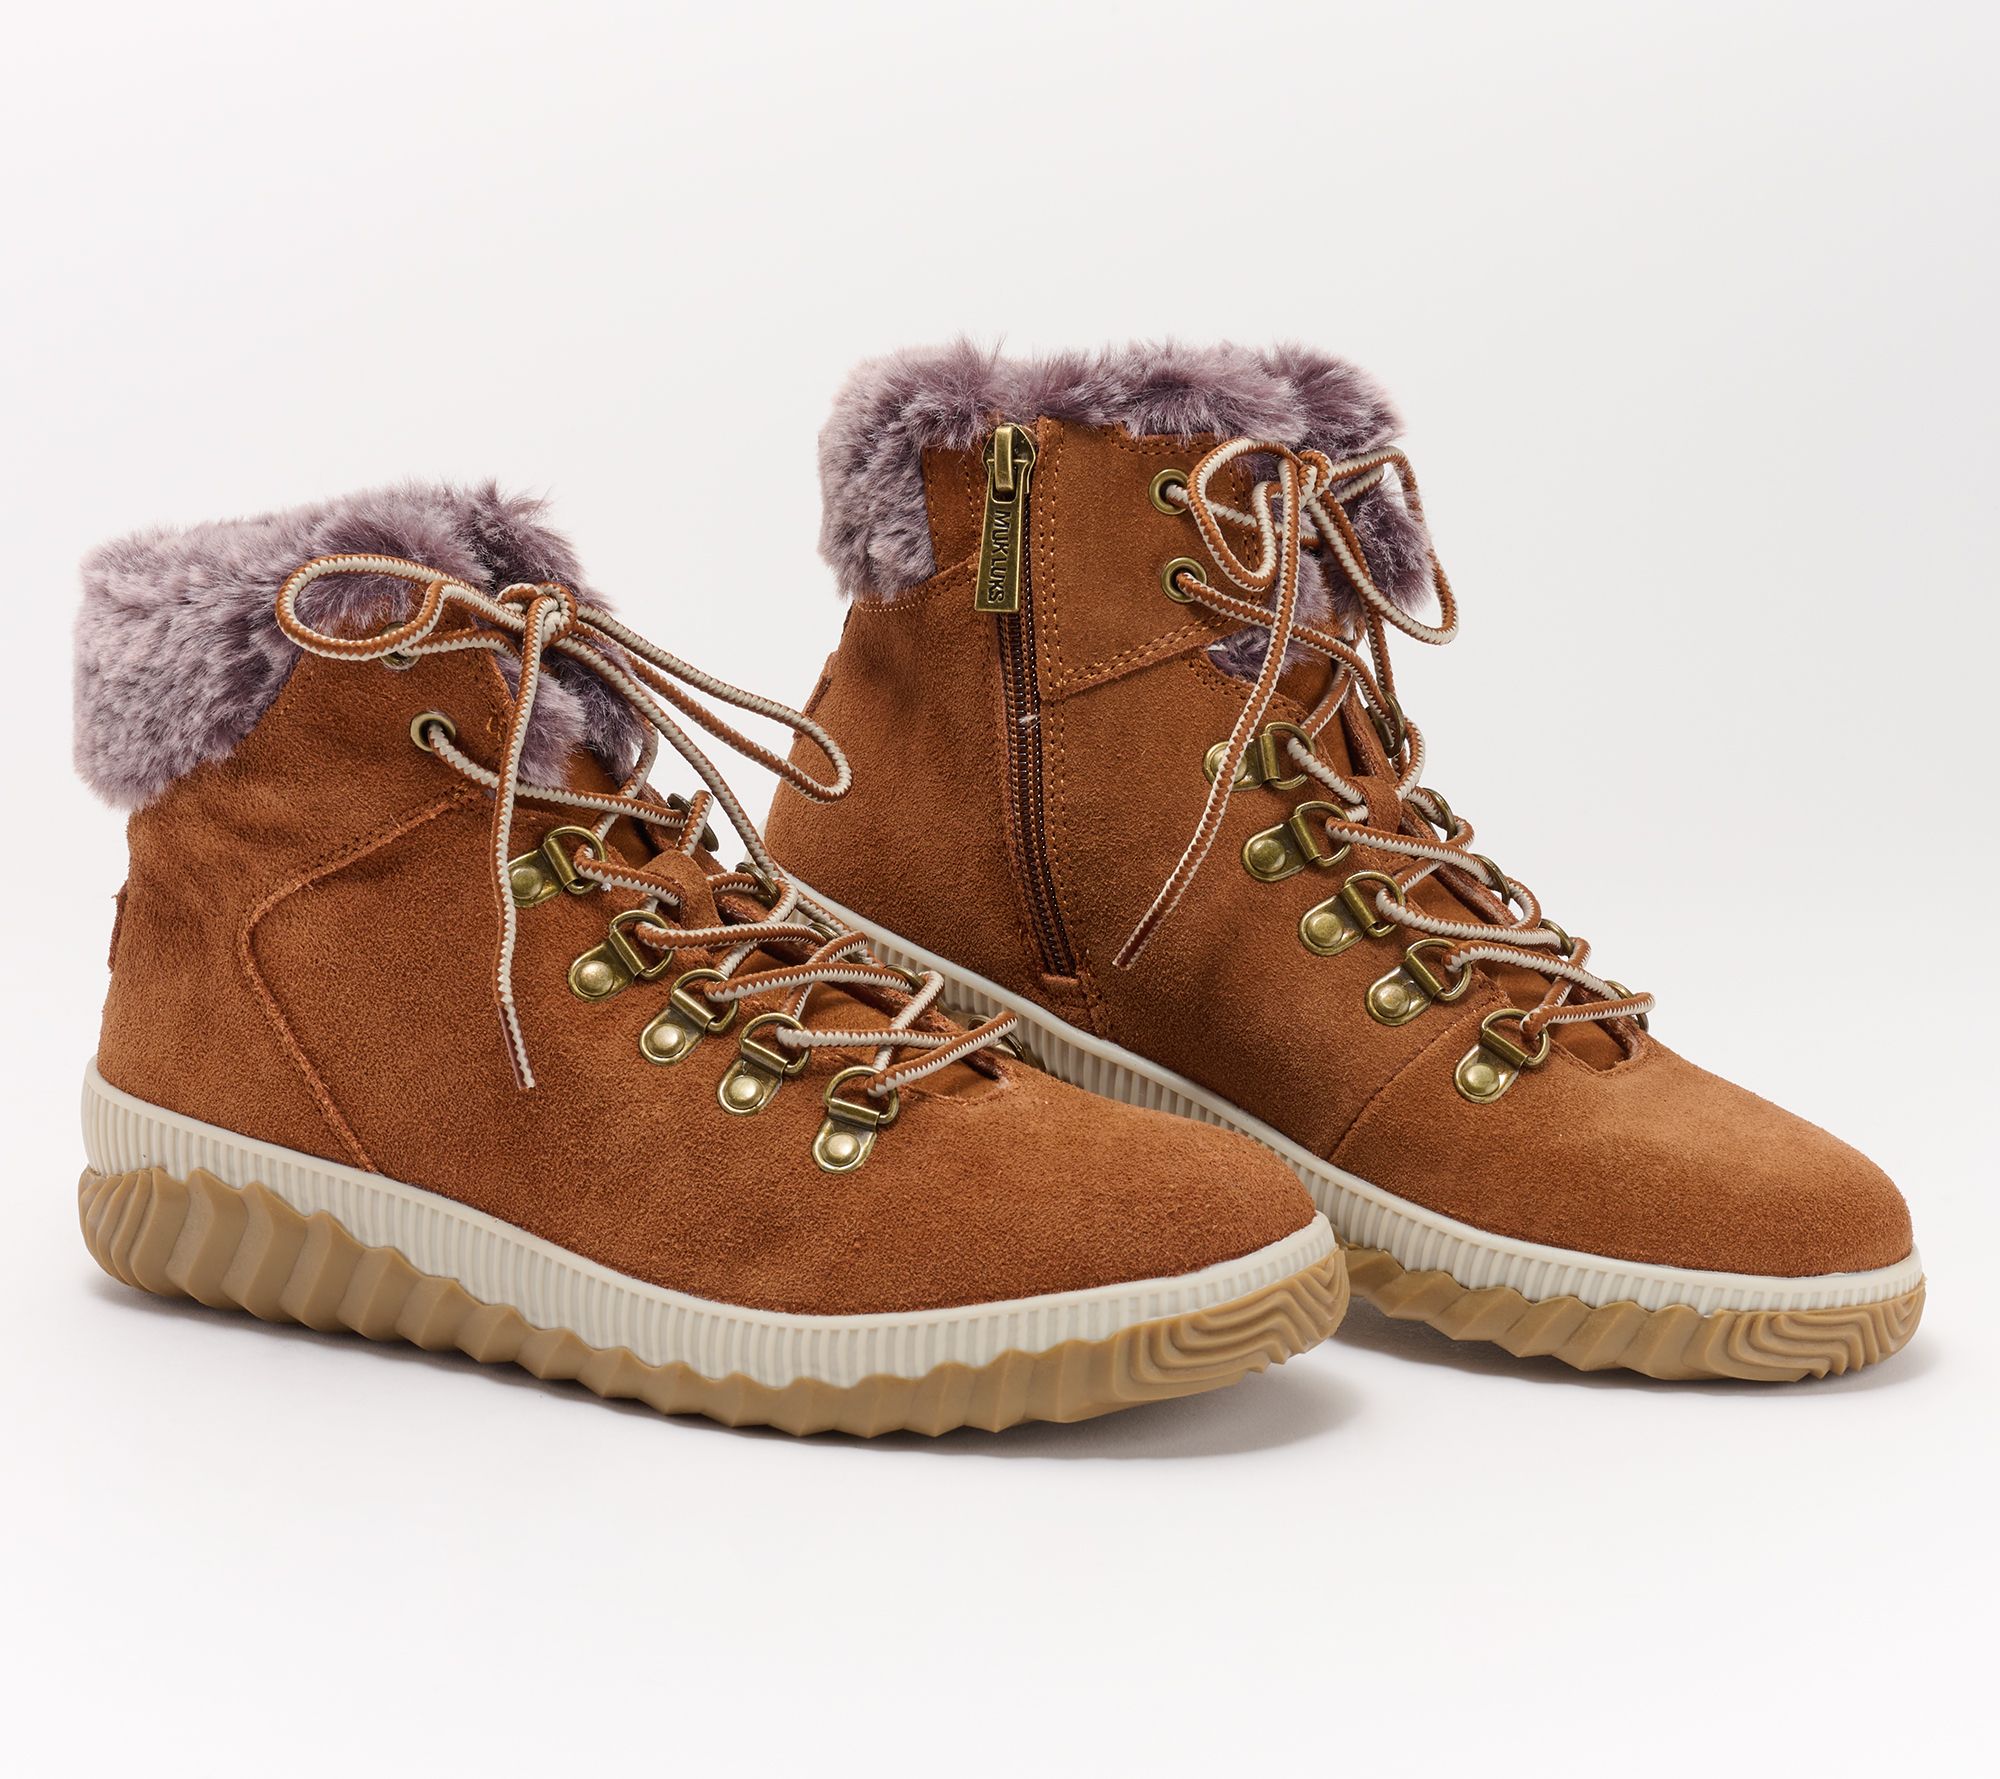 Muk Luks Suede Cuffed Winter Boots - Asher 